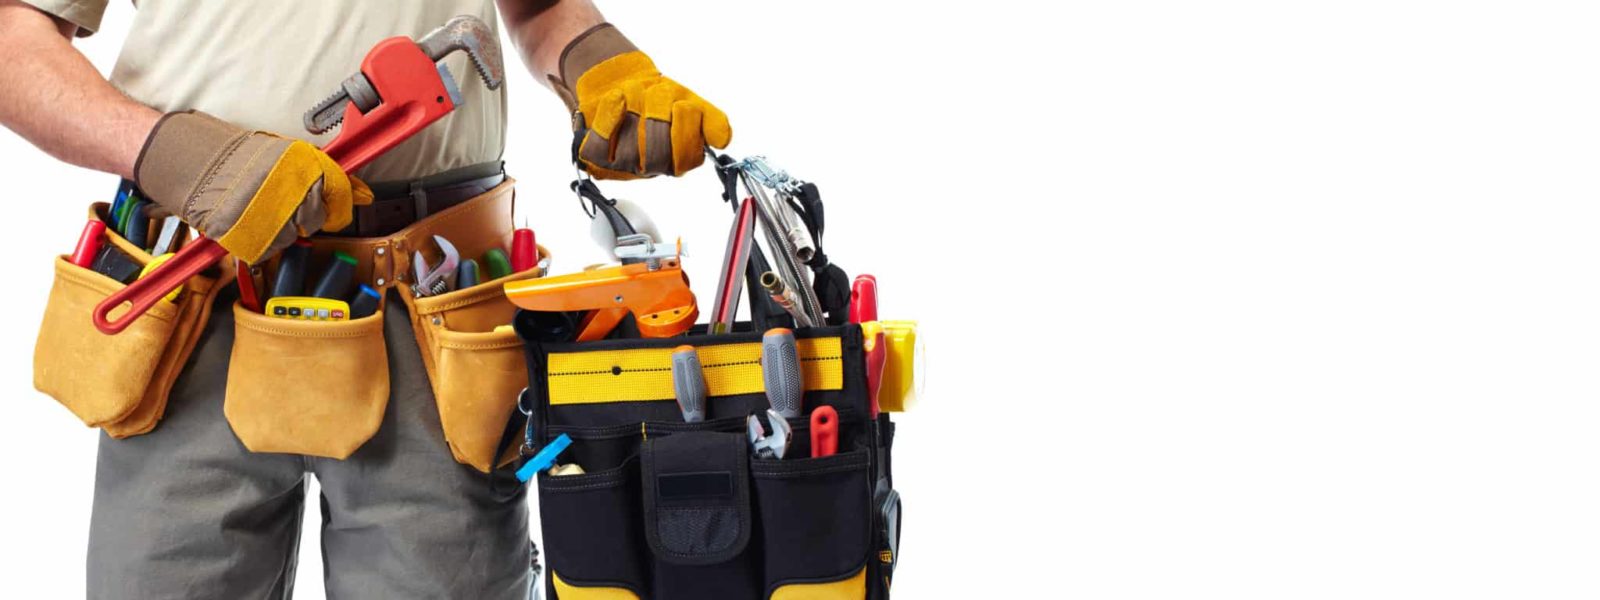 handyman holding a bag of tools